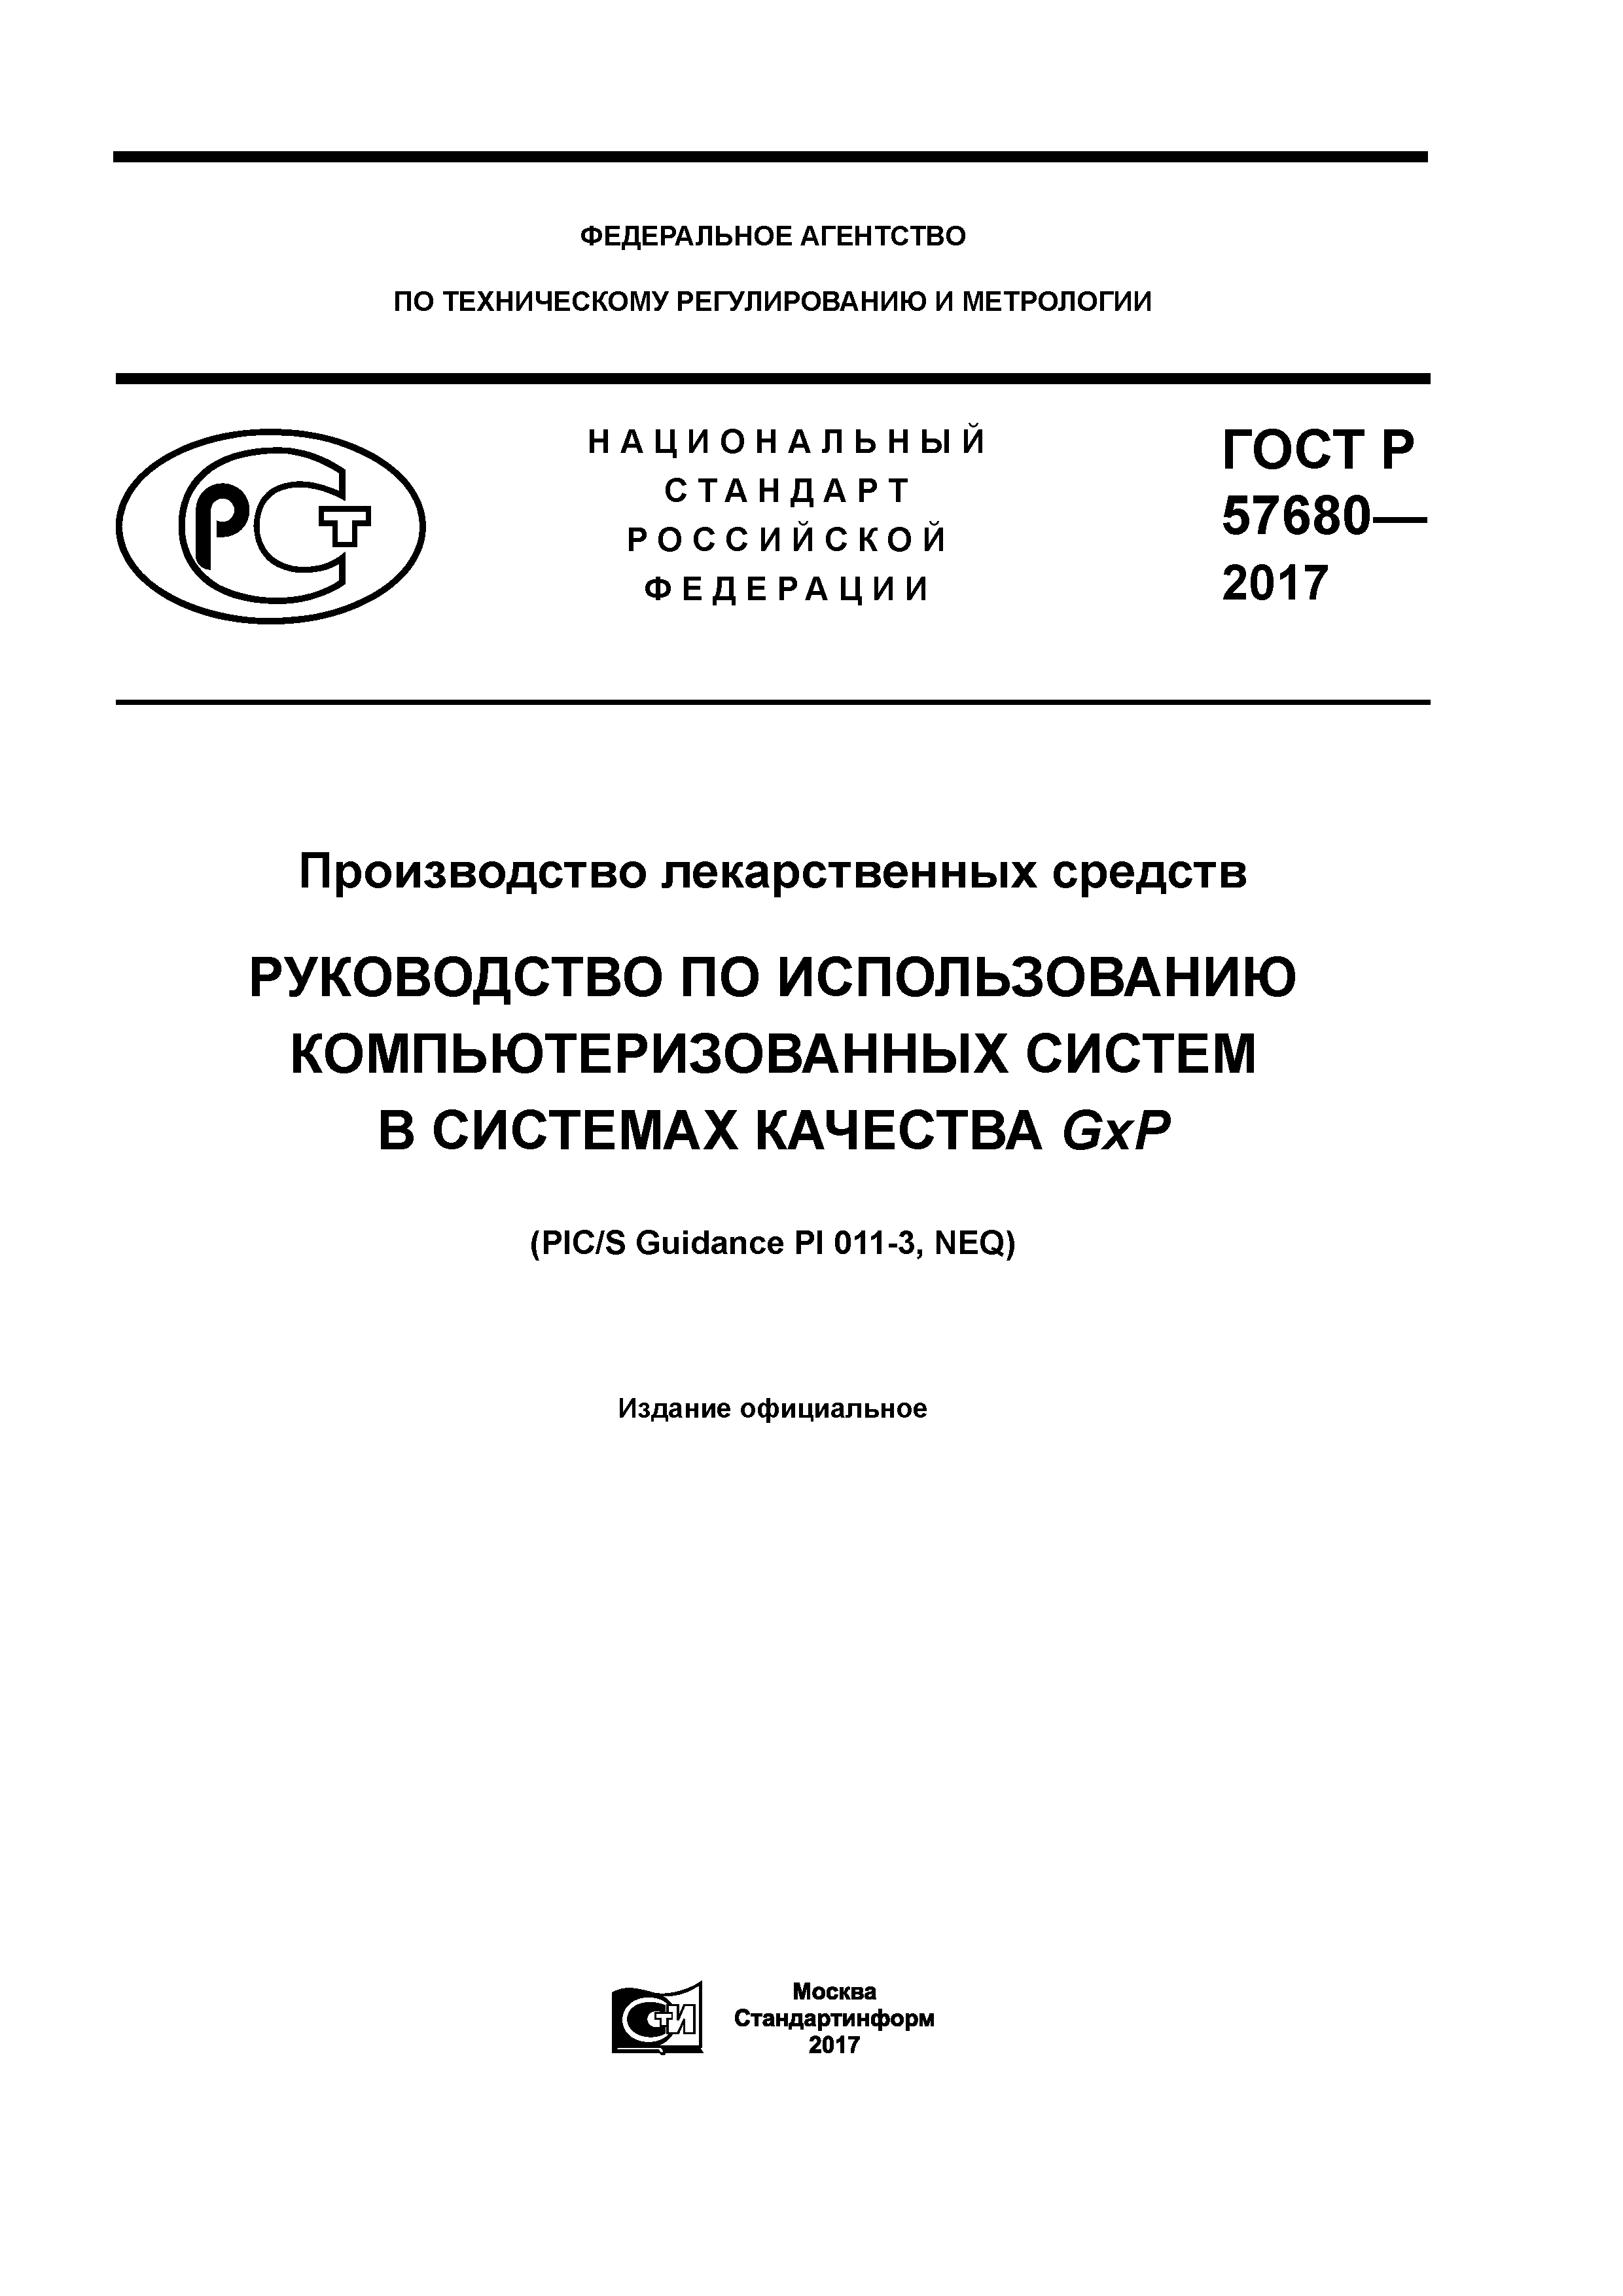 ГОСТ Р 57680-2017